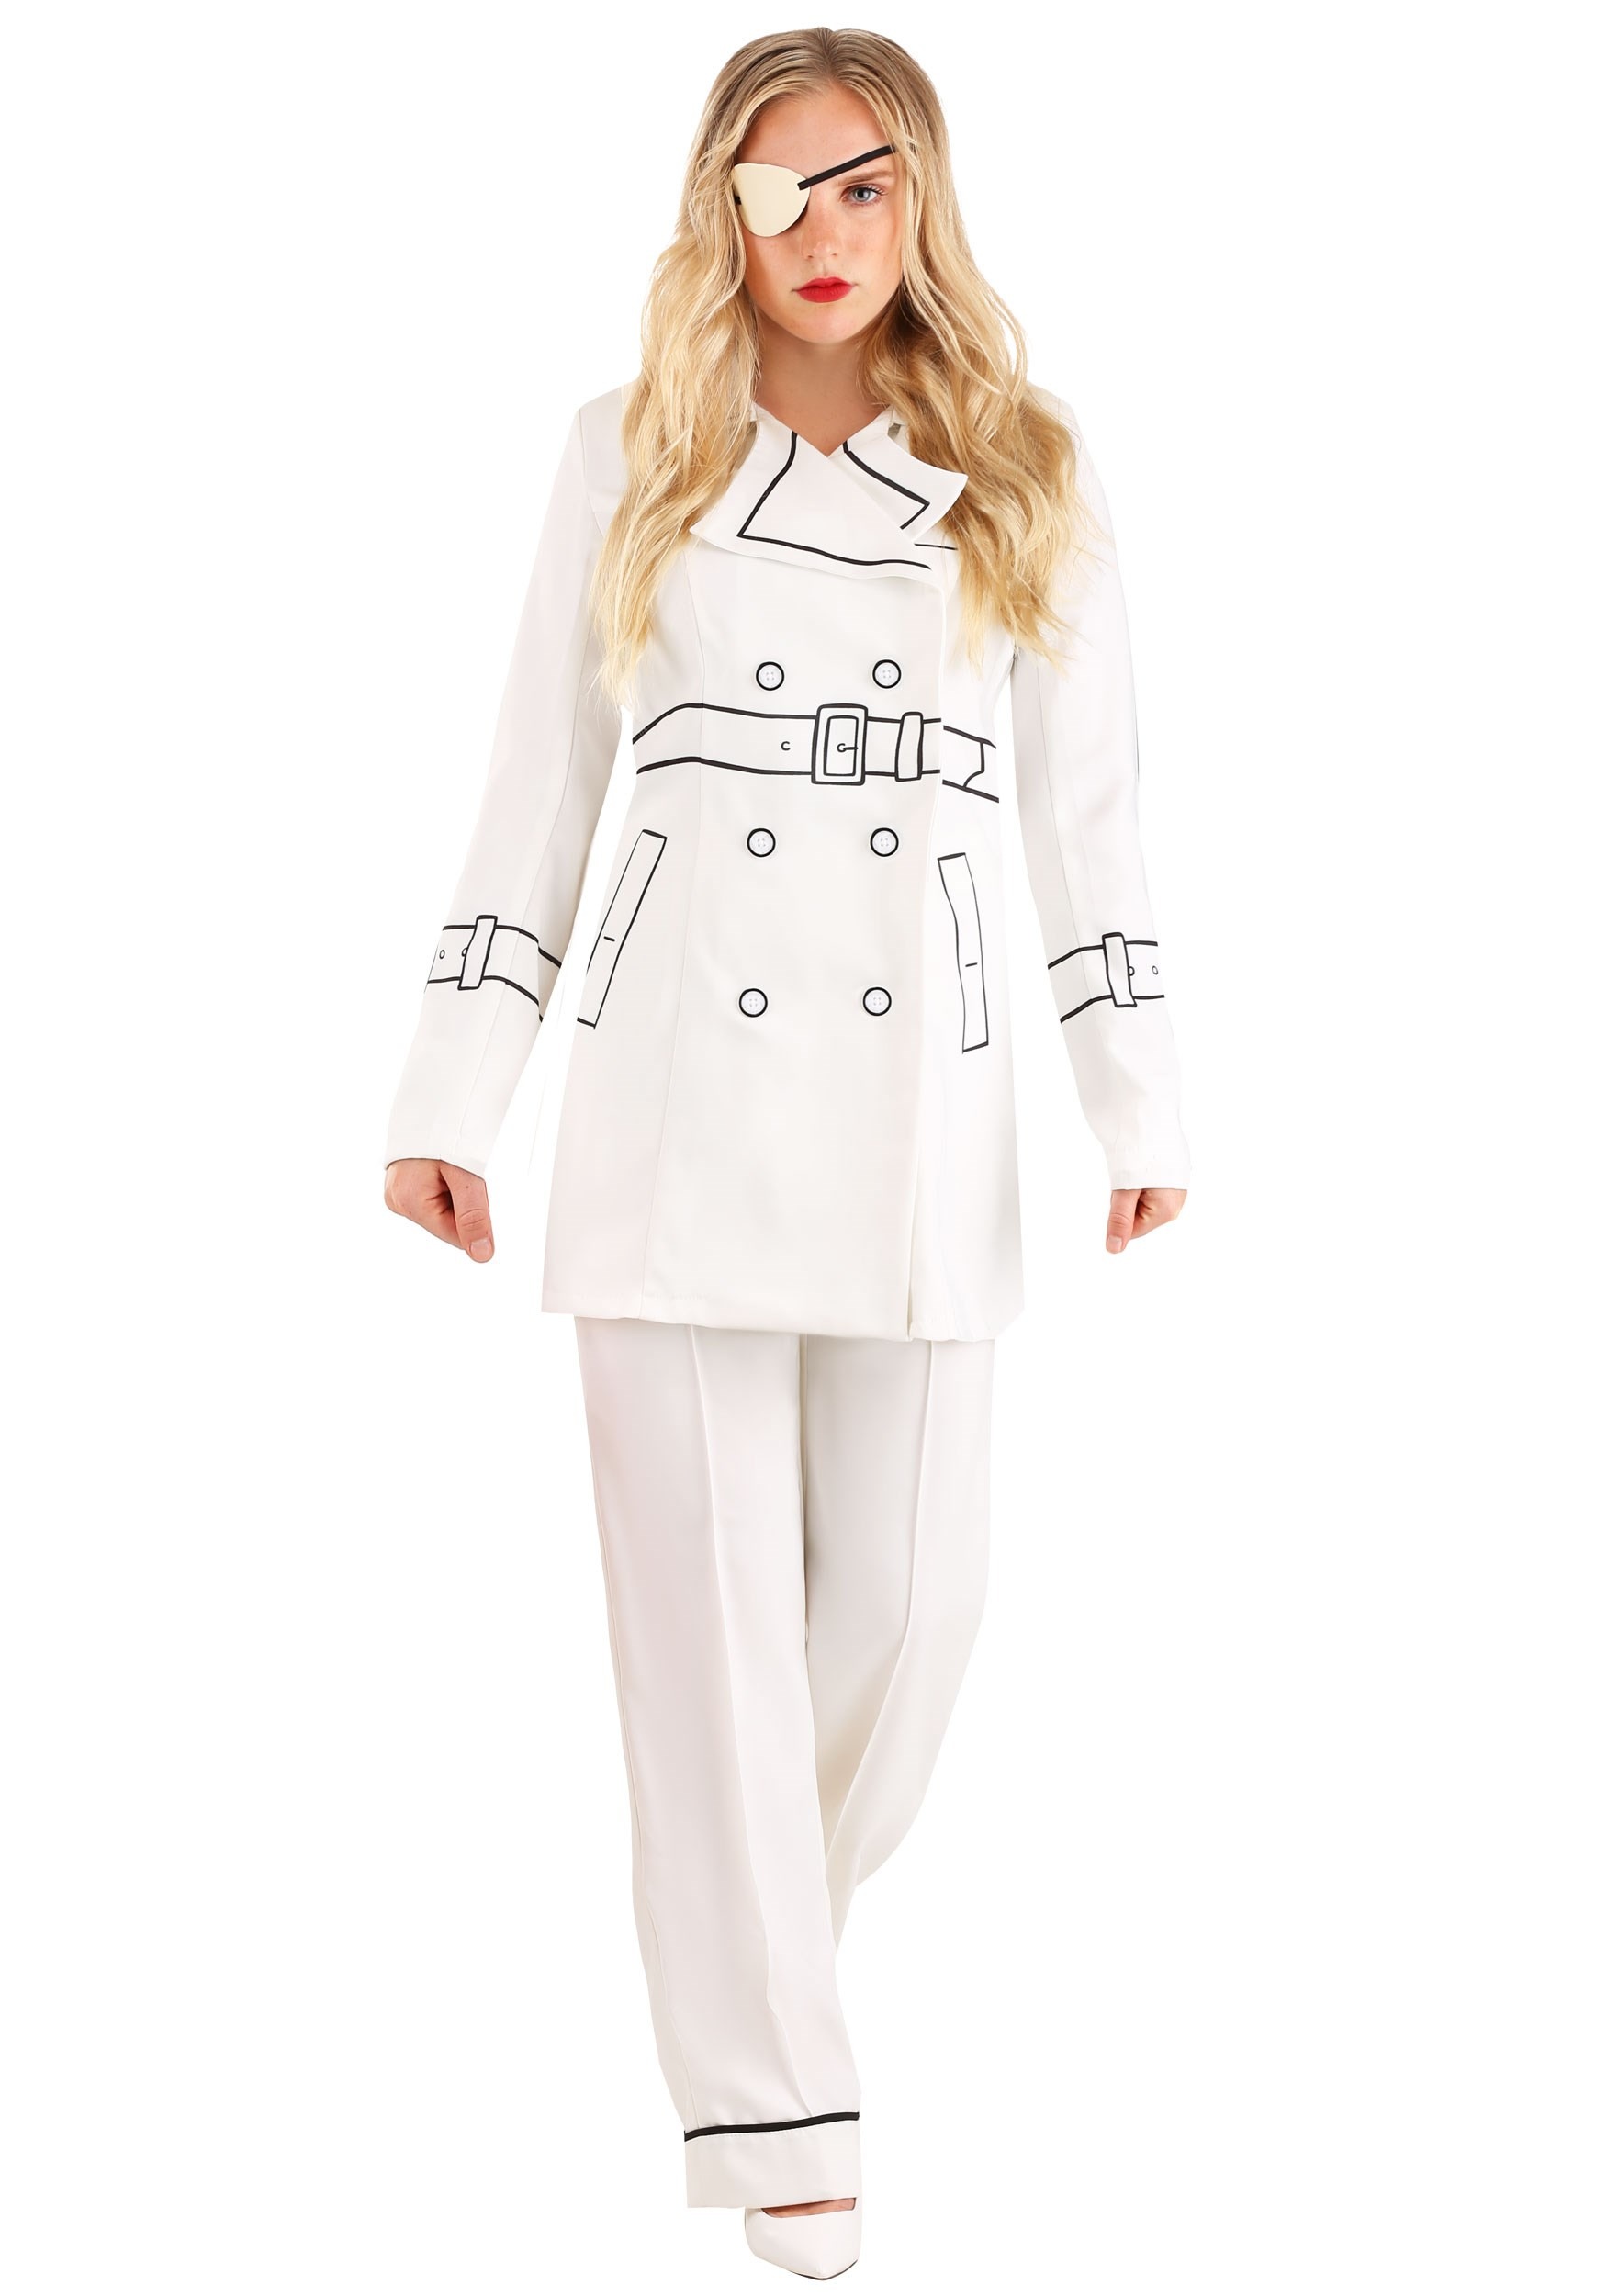 Image of Kill Bill Elle Driver Trench Coat Costume for Women ID FUN9316AD-L